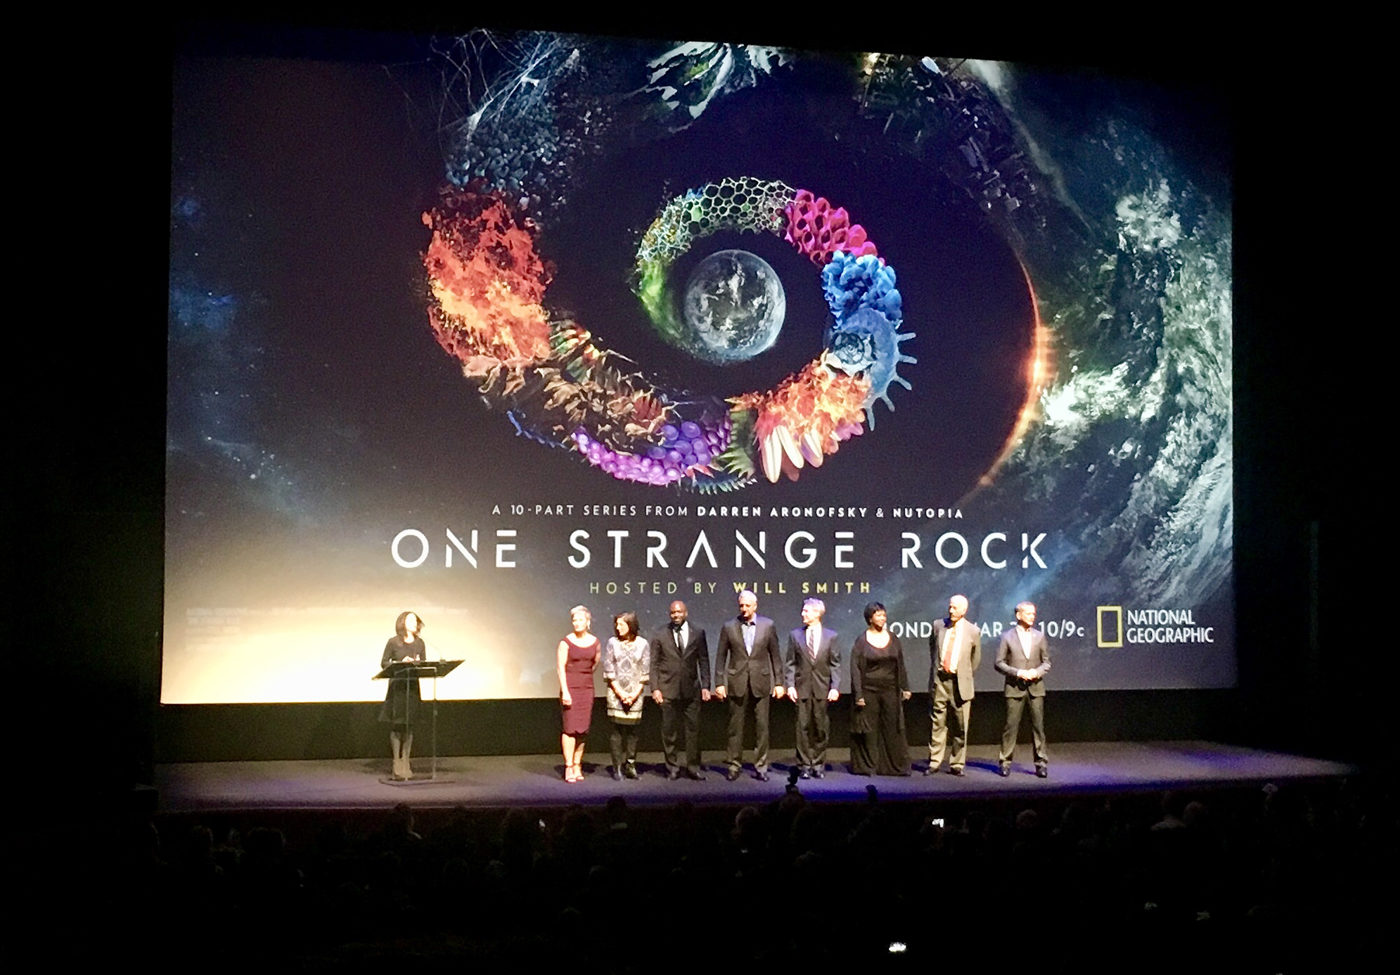 Photo of cast taken March 14, 2018 New York premiere of "One Strange Rock" by Natalia Reagan.